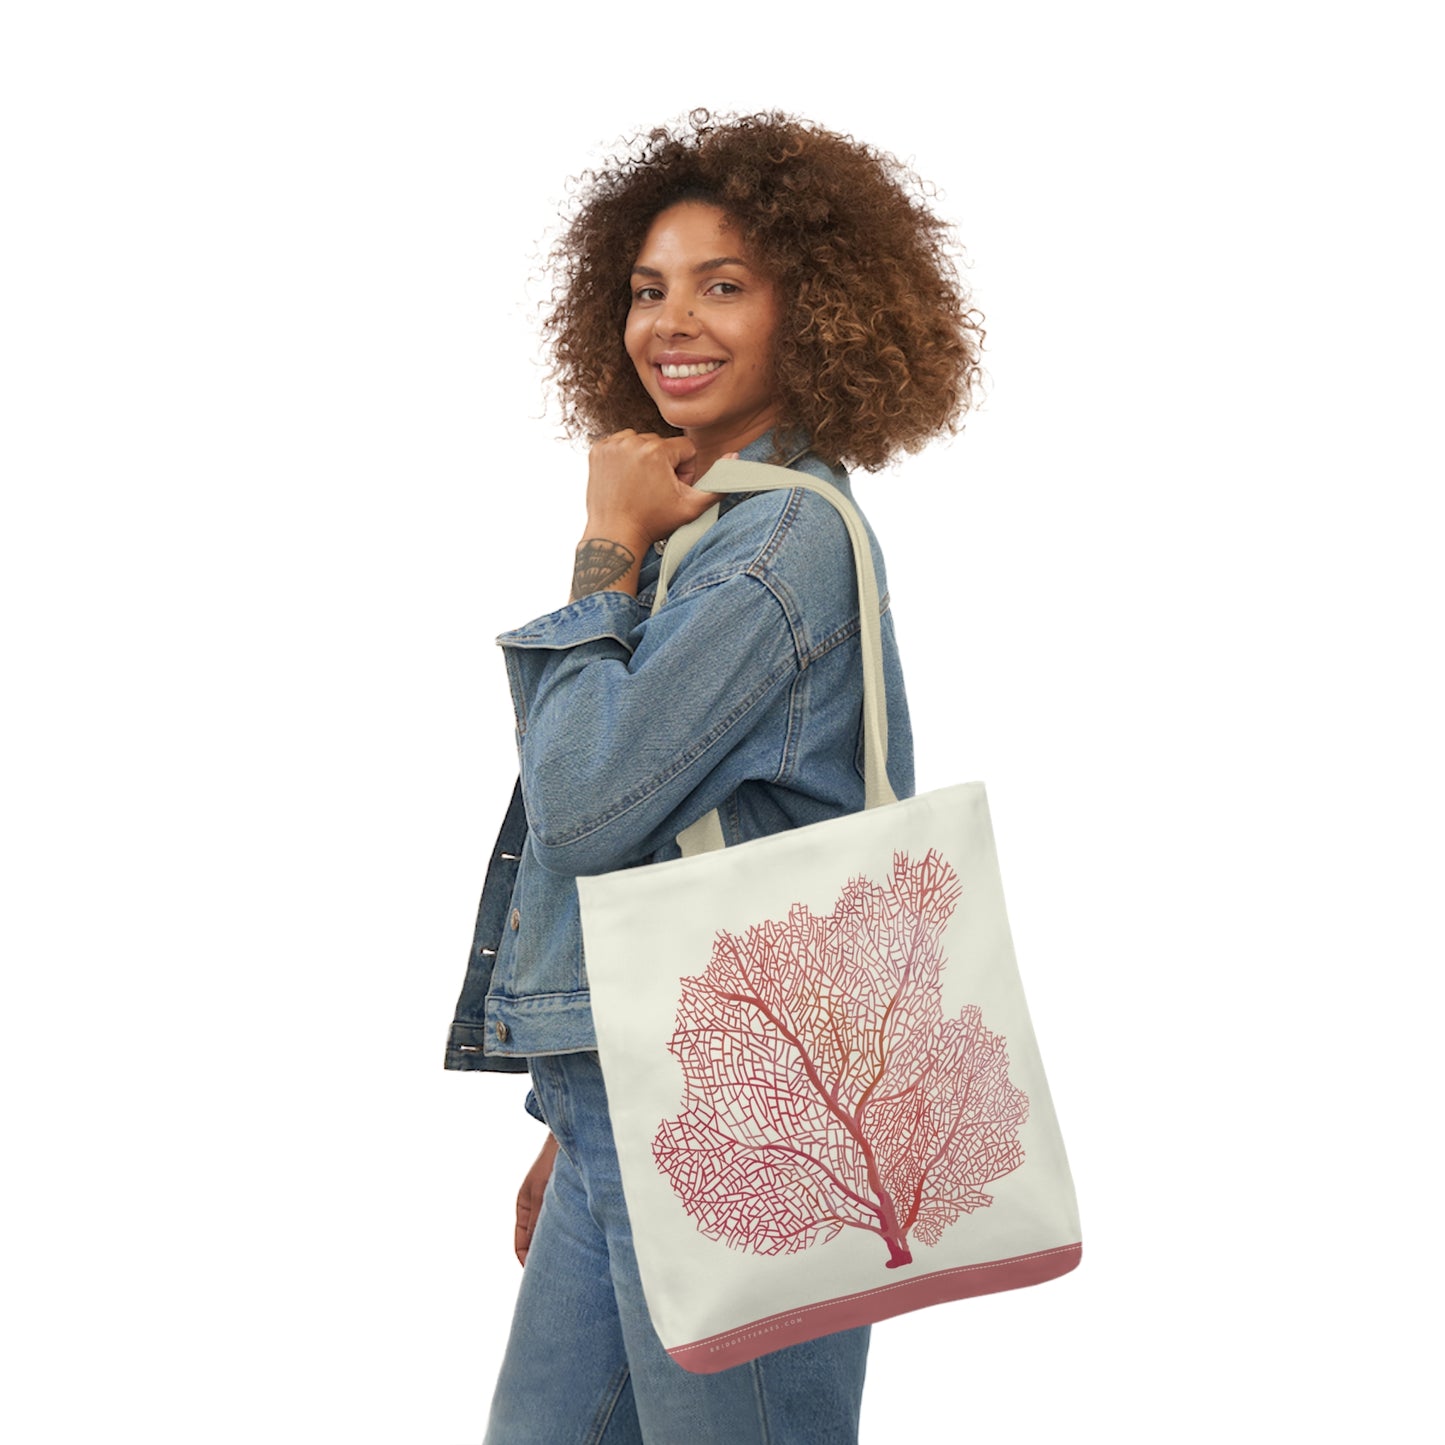 Blush Acropora Polyester Canvas Tote Bag